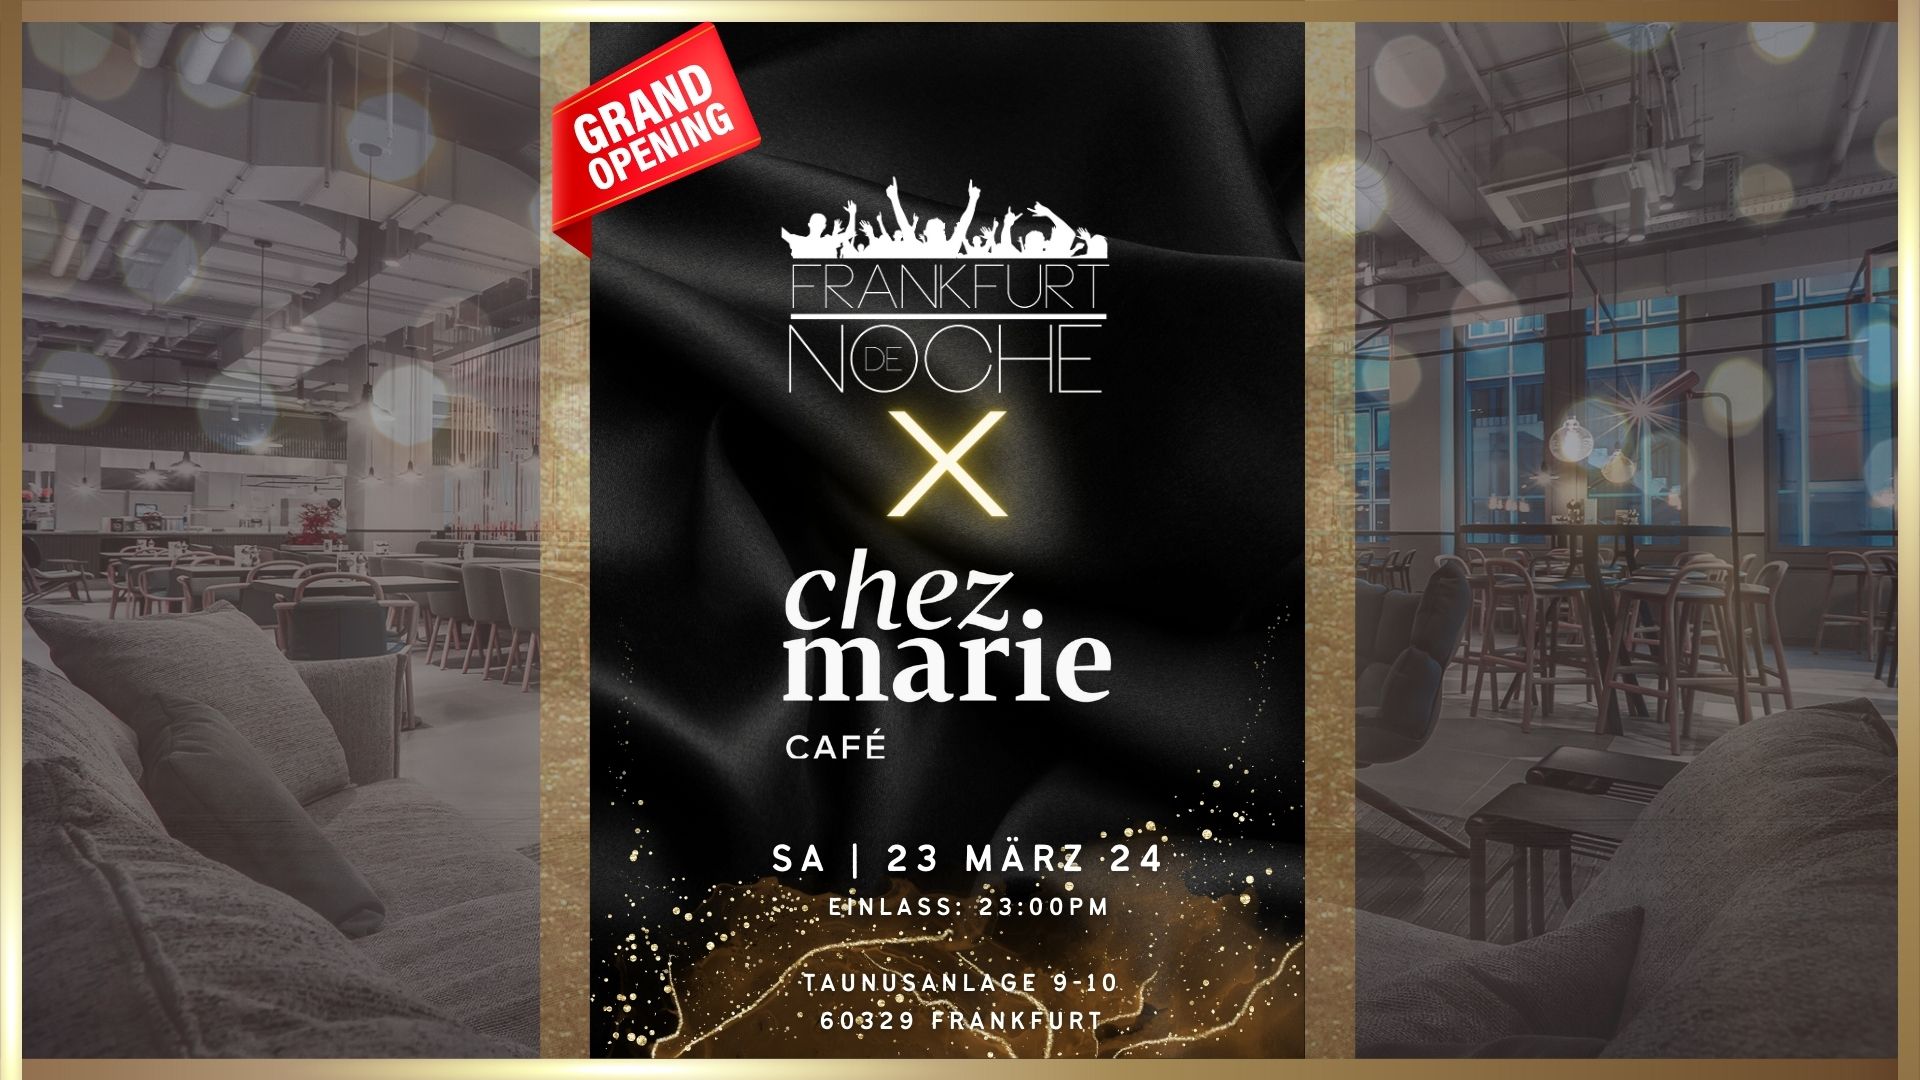 Frankfurt de Noche x Chez Marie 23.03.24 – Chez Marie Café, Frankfurt